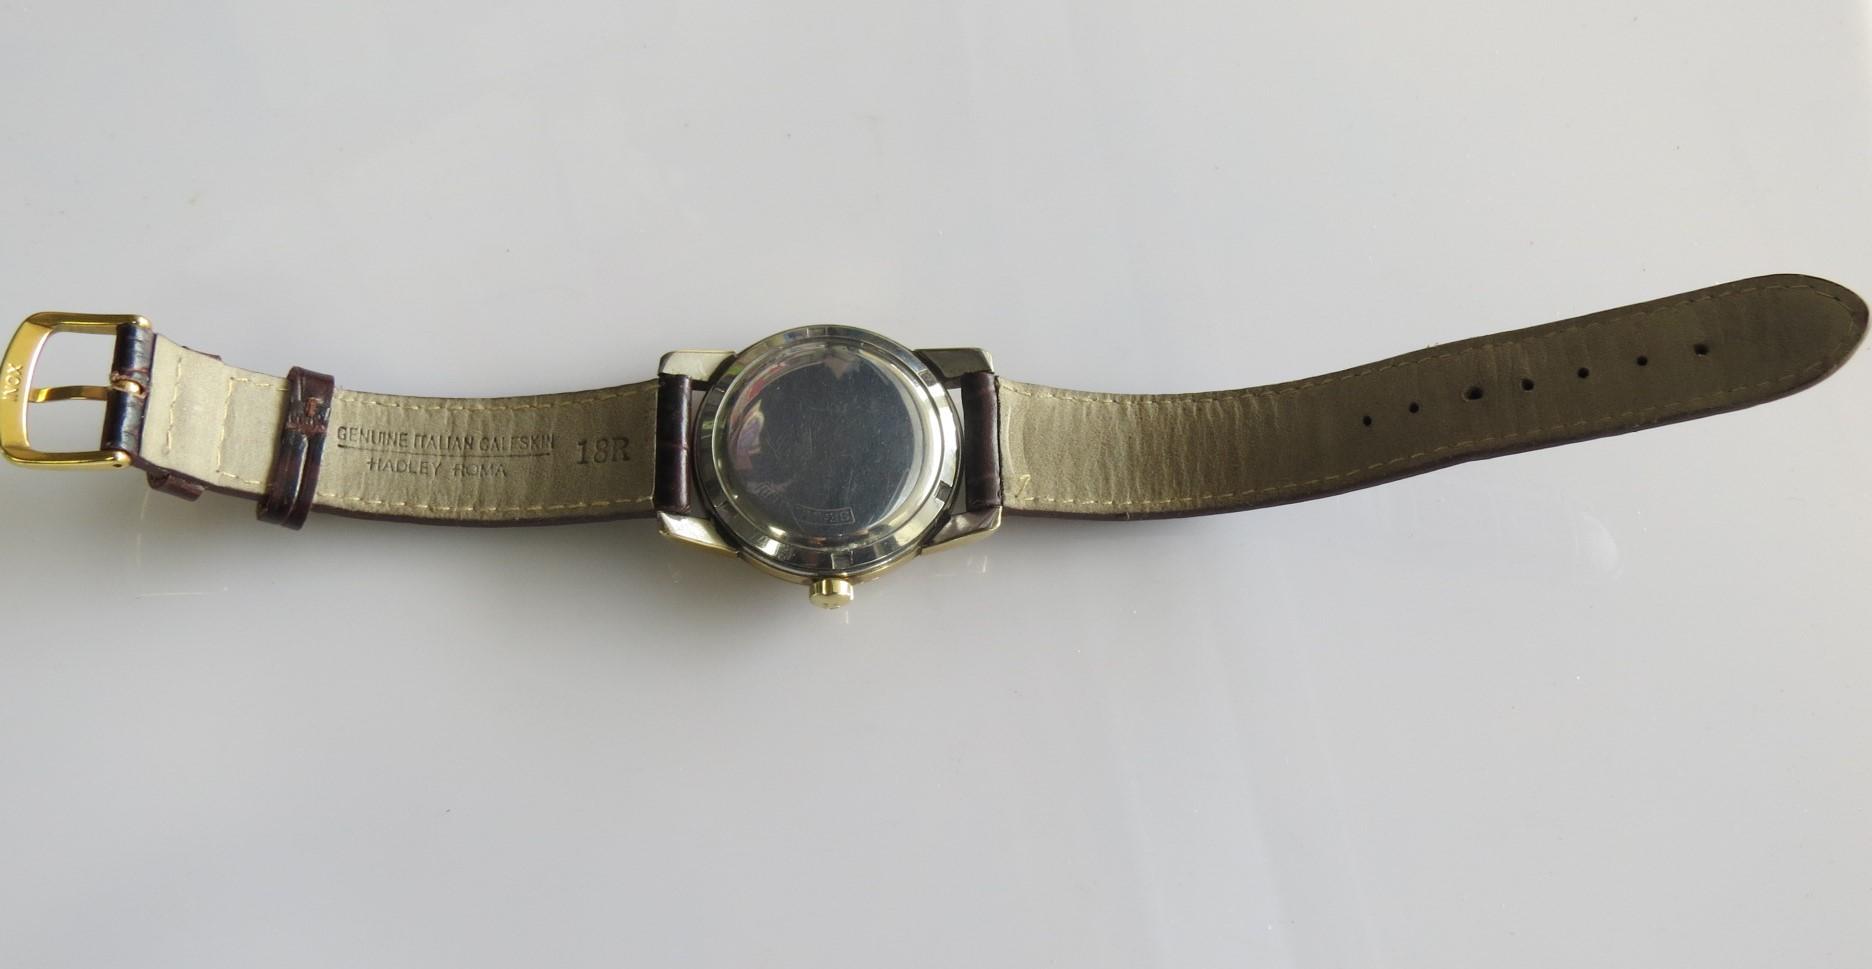 Vintage Omega Seamaster Watch